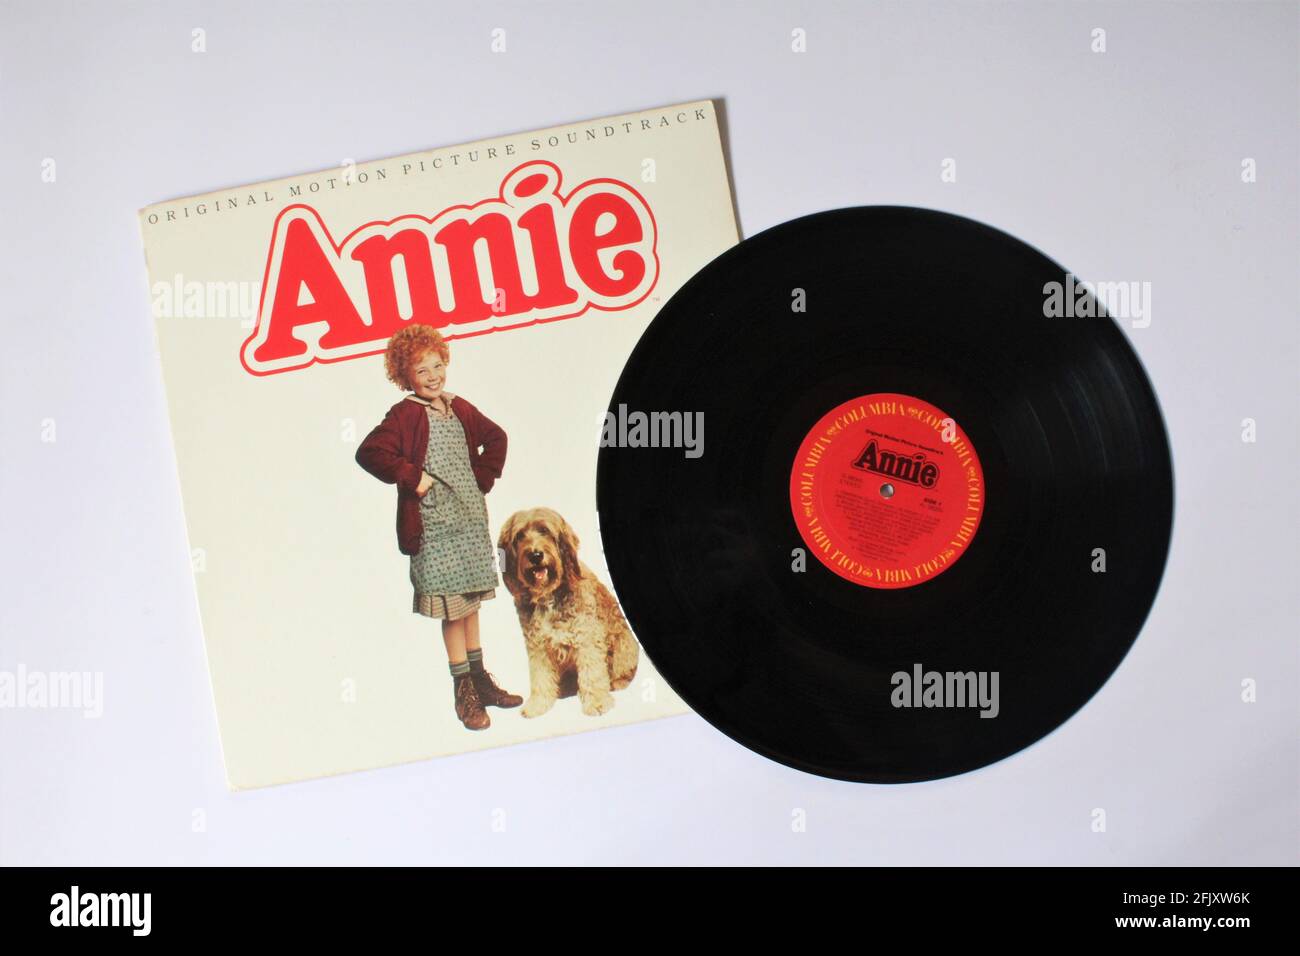 Annie Original Motion Picture Soundtrack music album on vinyl record LP disc. Classic movie. Stock Photo